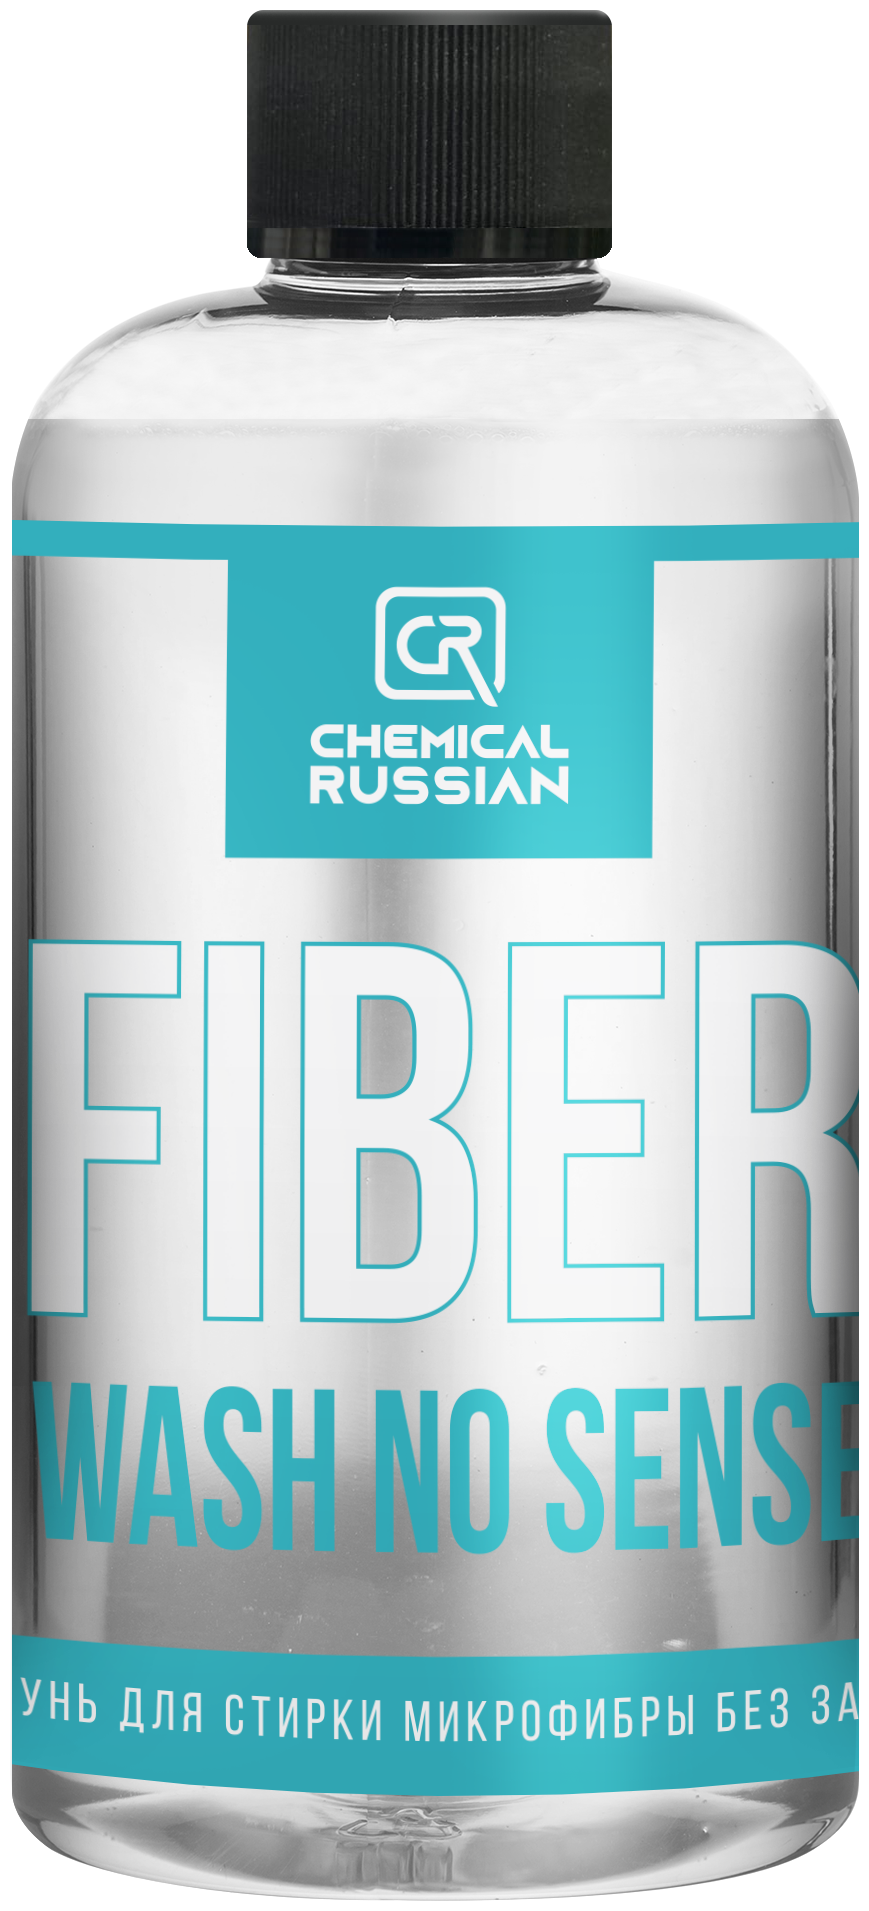 Fiber Wash NO SENSE - Шампунь для стирки микрофибр 500 мл CR808 Chemical Russian